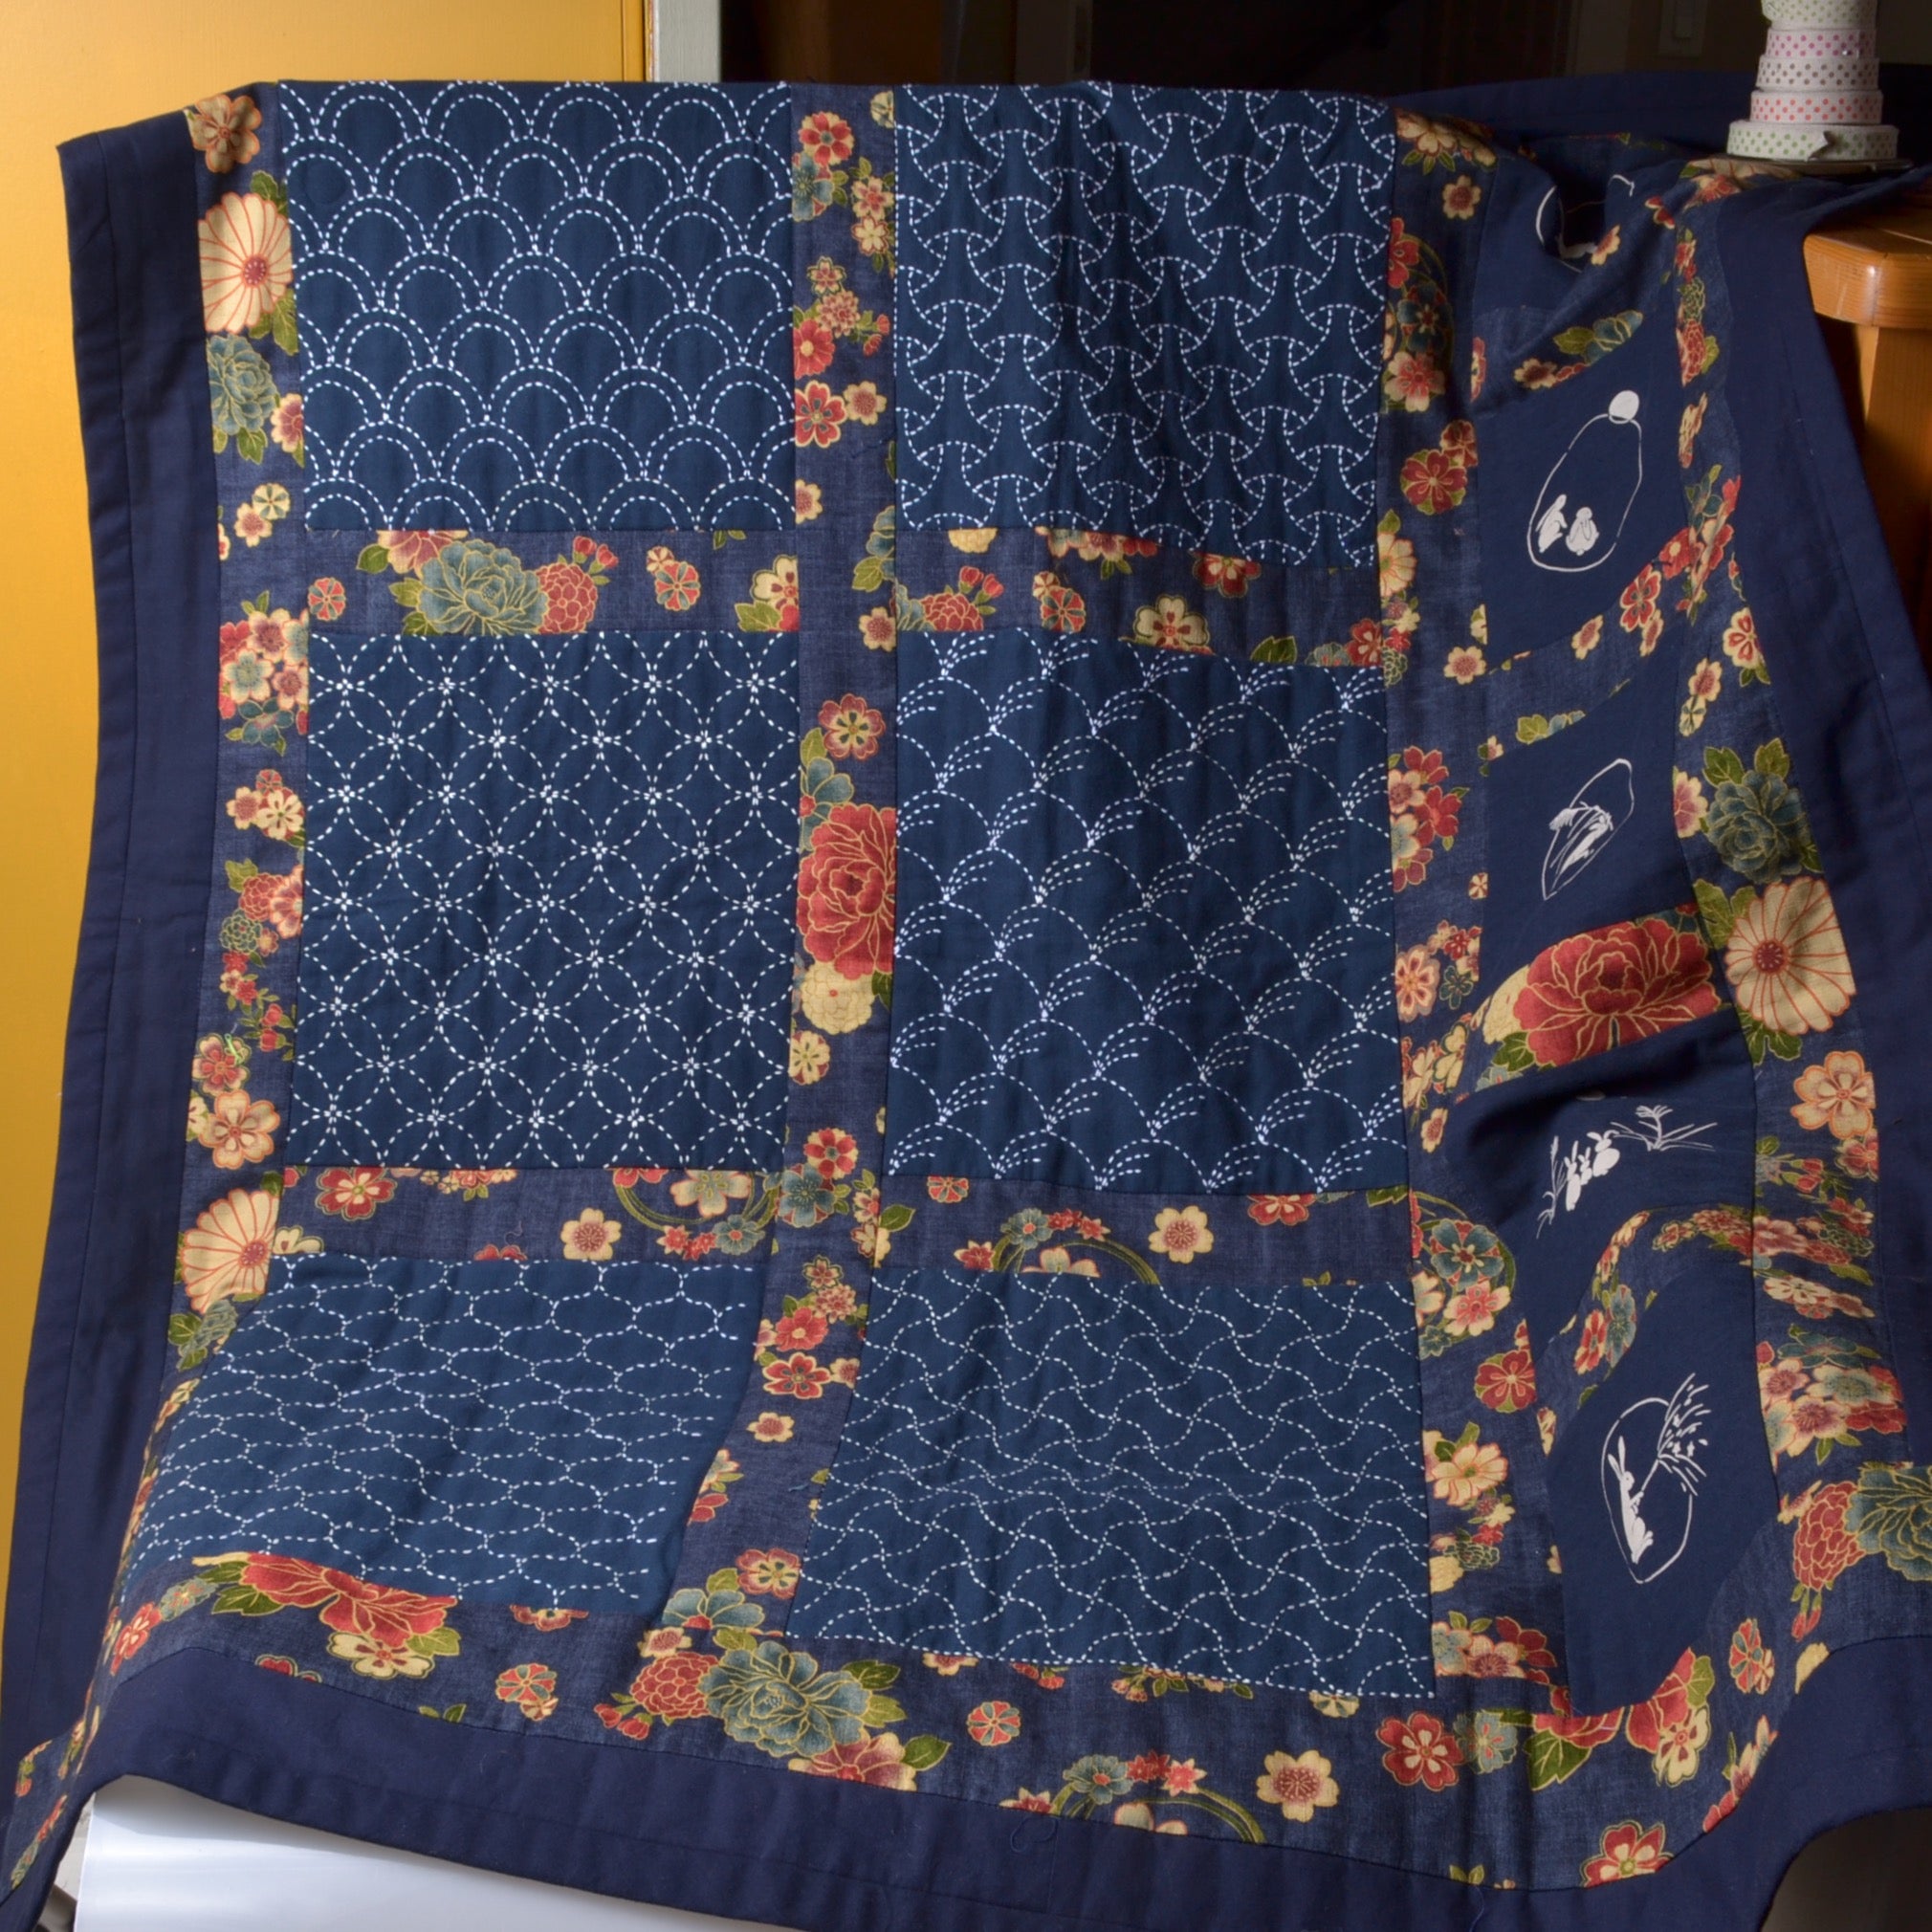 sashiko quilt made from preprinted Olympus sampler fabrics